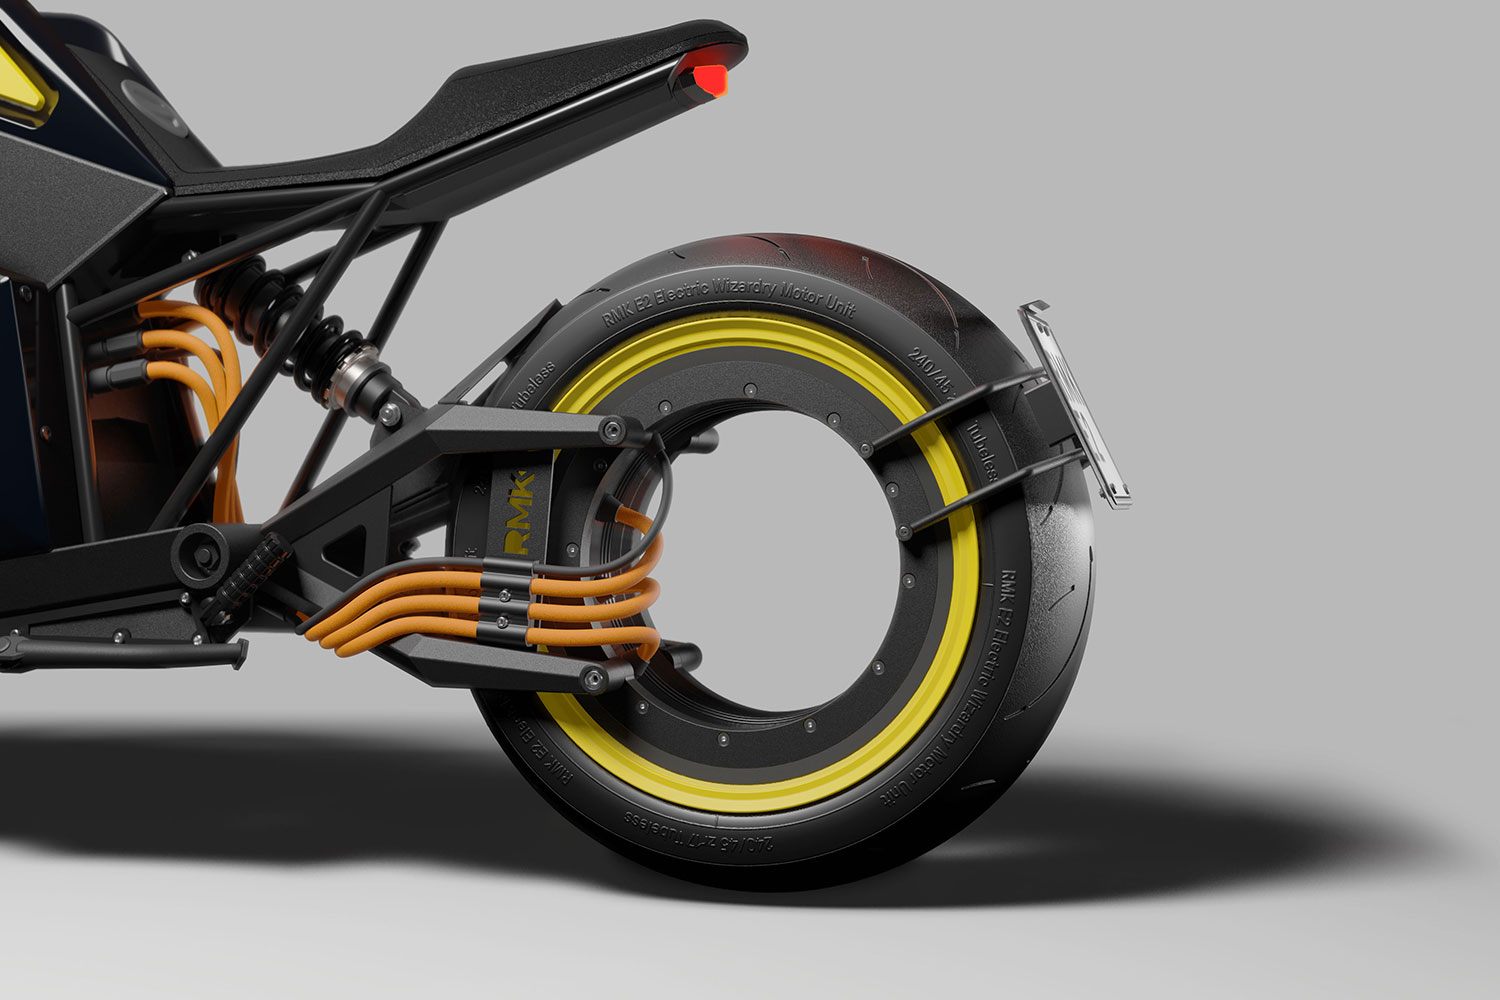 rmk e2 electric motorcycle debut 4